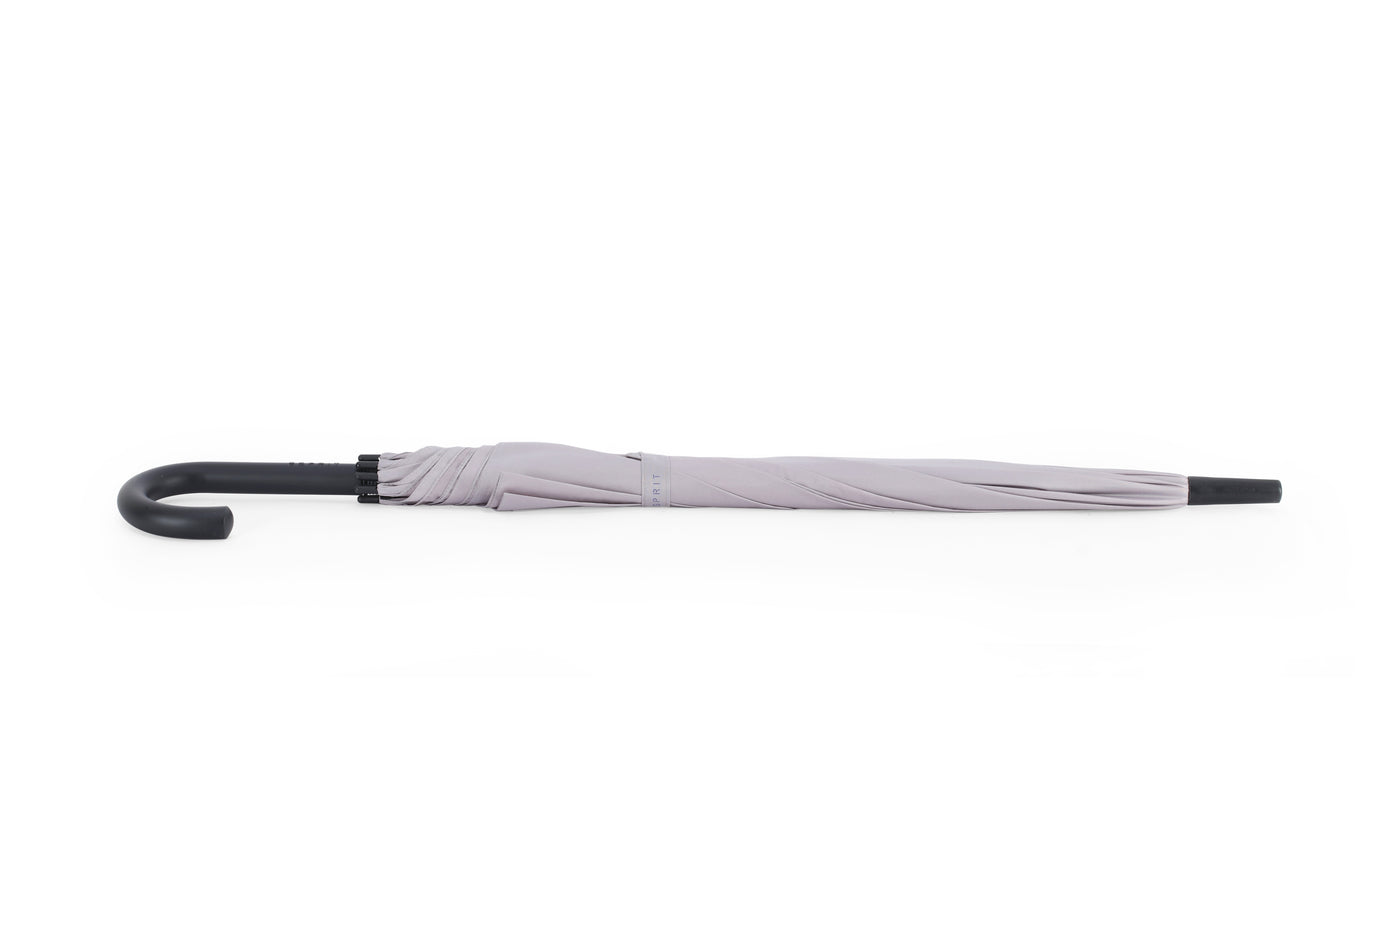 Esprit Long Windproof Umbrella with UV Coating